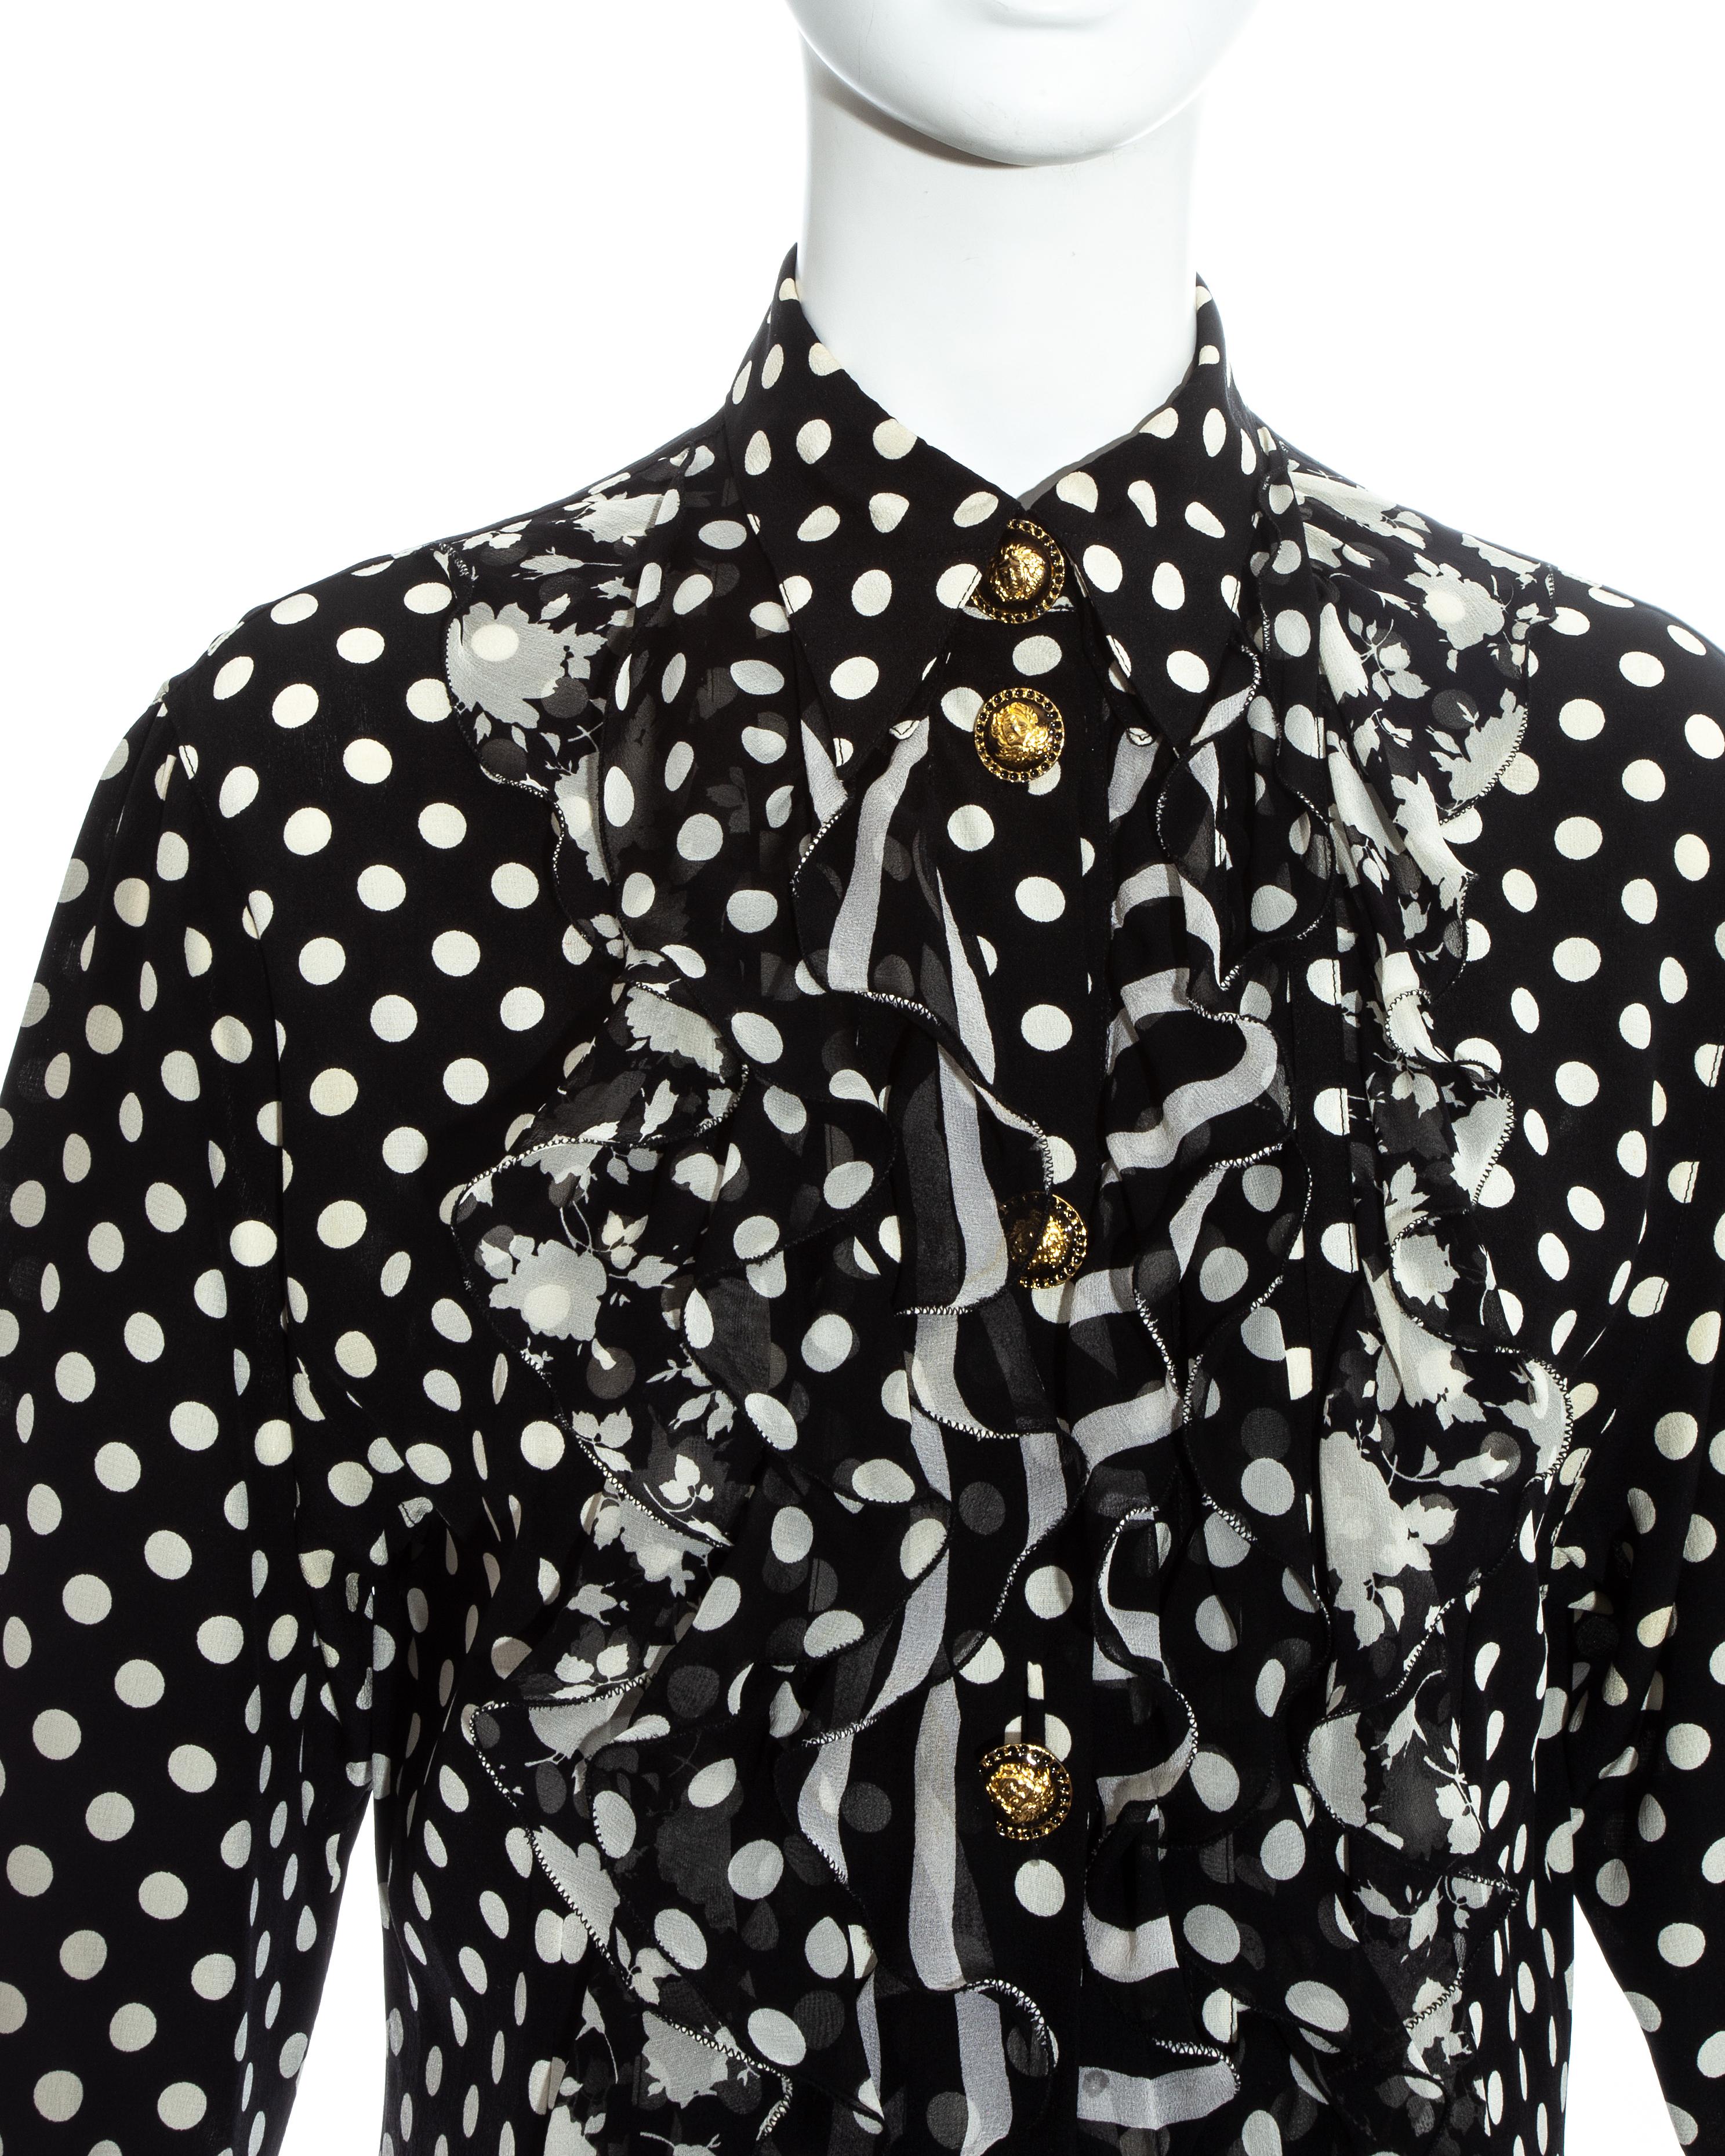 Women's Gianni Versace black and white polkadot silk ruffled shirt dress, ss 1993